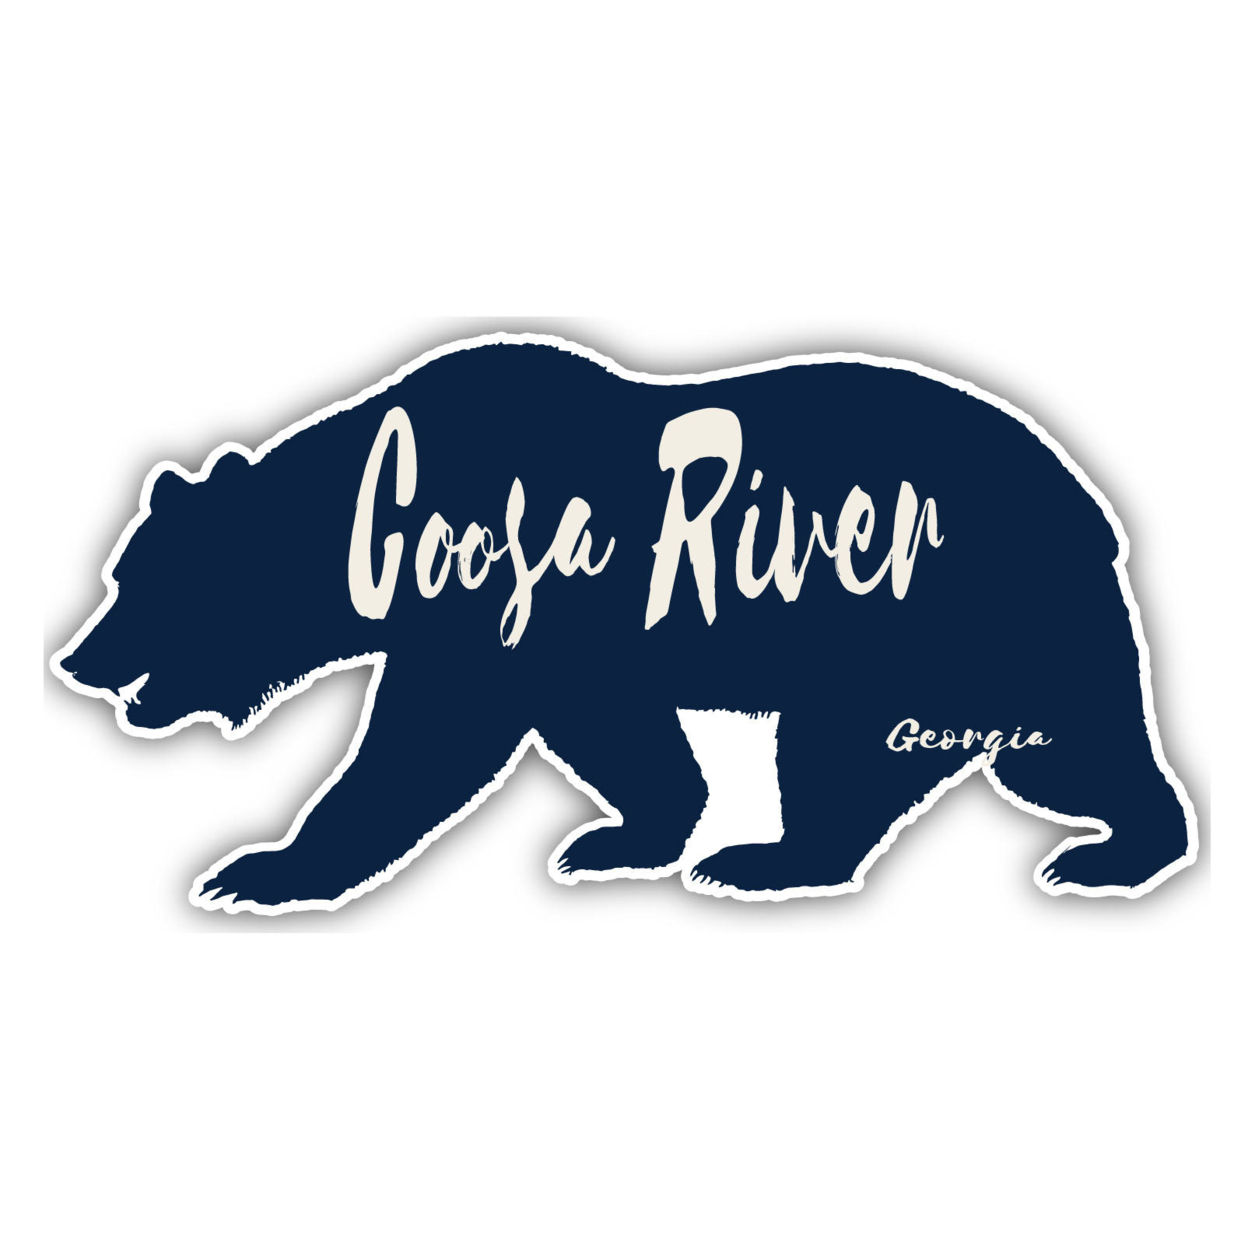 Coosa River Georgia Souvenir Decorative Stickers (Choose Theme And Size) - Single Unit, 12-Inch, Bear